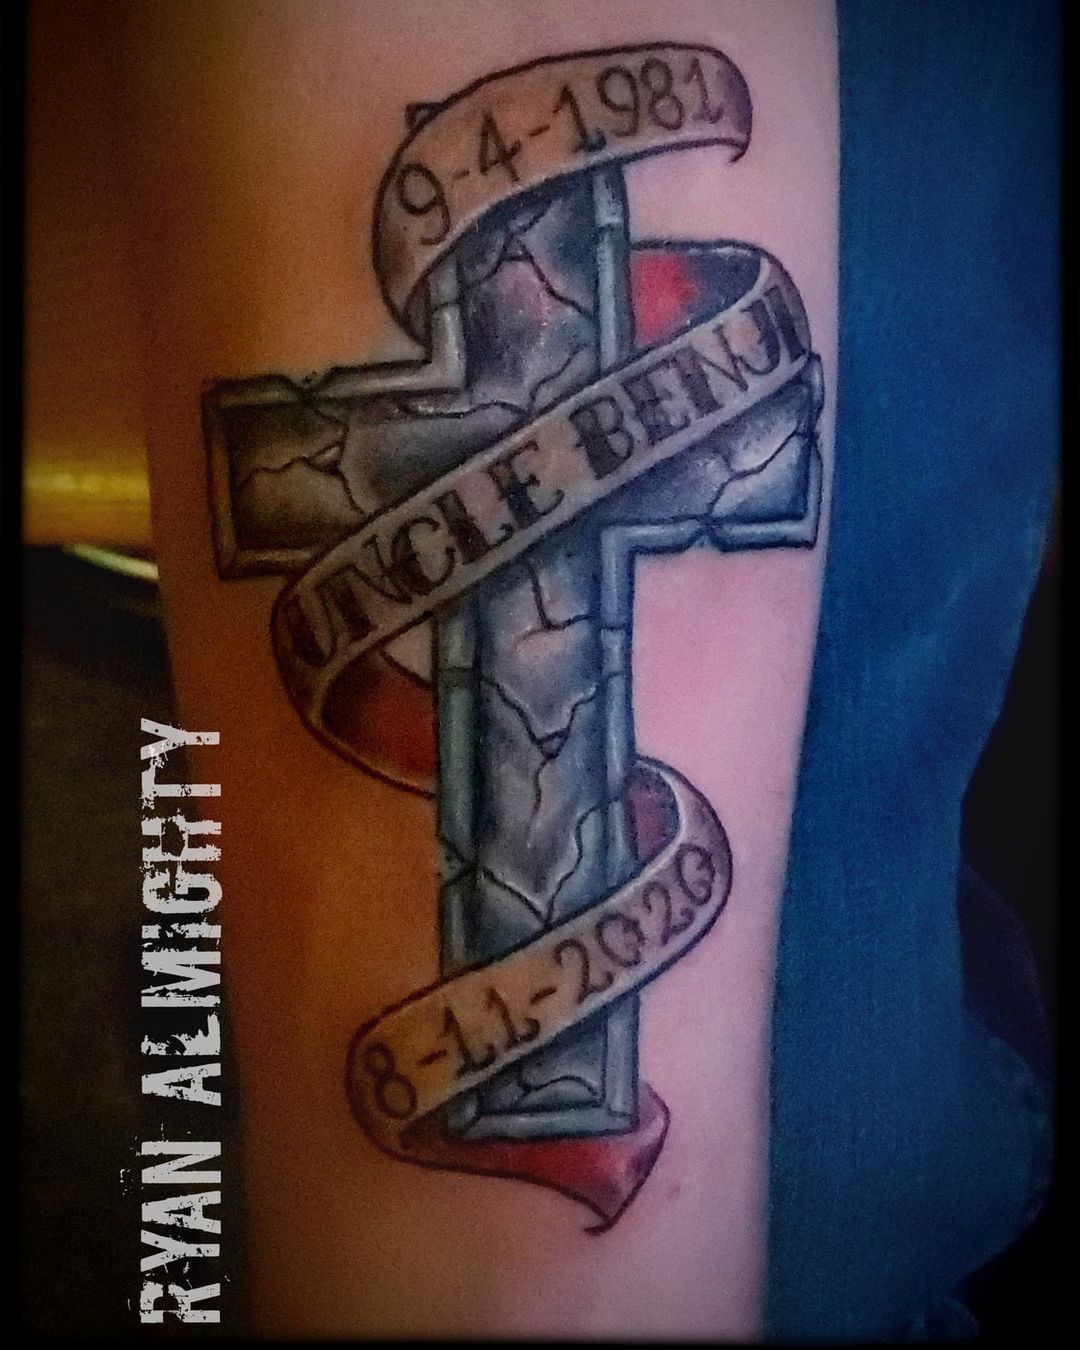 I don’t do traditional style tattooing often. This was alotta fun !!
#almightystudios #RyanAlmighty #tattoolife #tattoo #crosstattoo #memorialtattoo #warrenpa (at Almighty Studios)
https://www.instagram.com/p/CRu8eFfMLhR/?utm_medium=tumblr